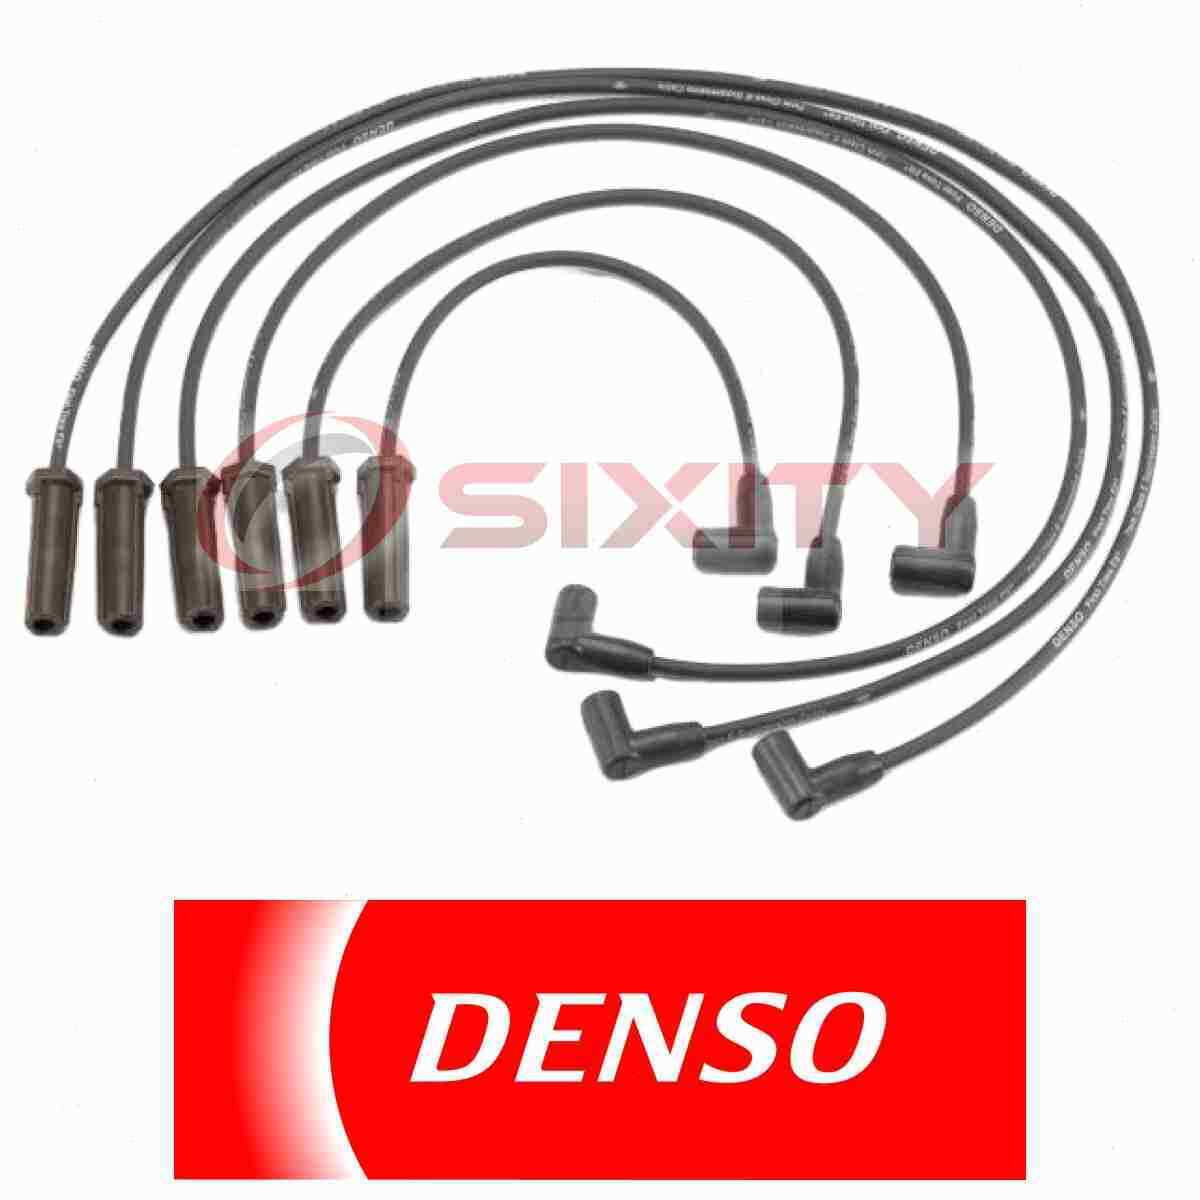 For Pontiac Bonneville DENSO Spark Plug Wire Set 3.8L V6 1999-2005 x8